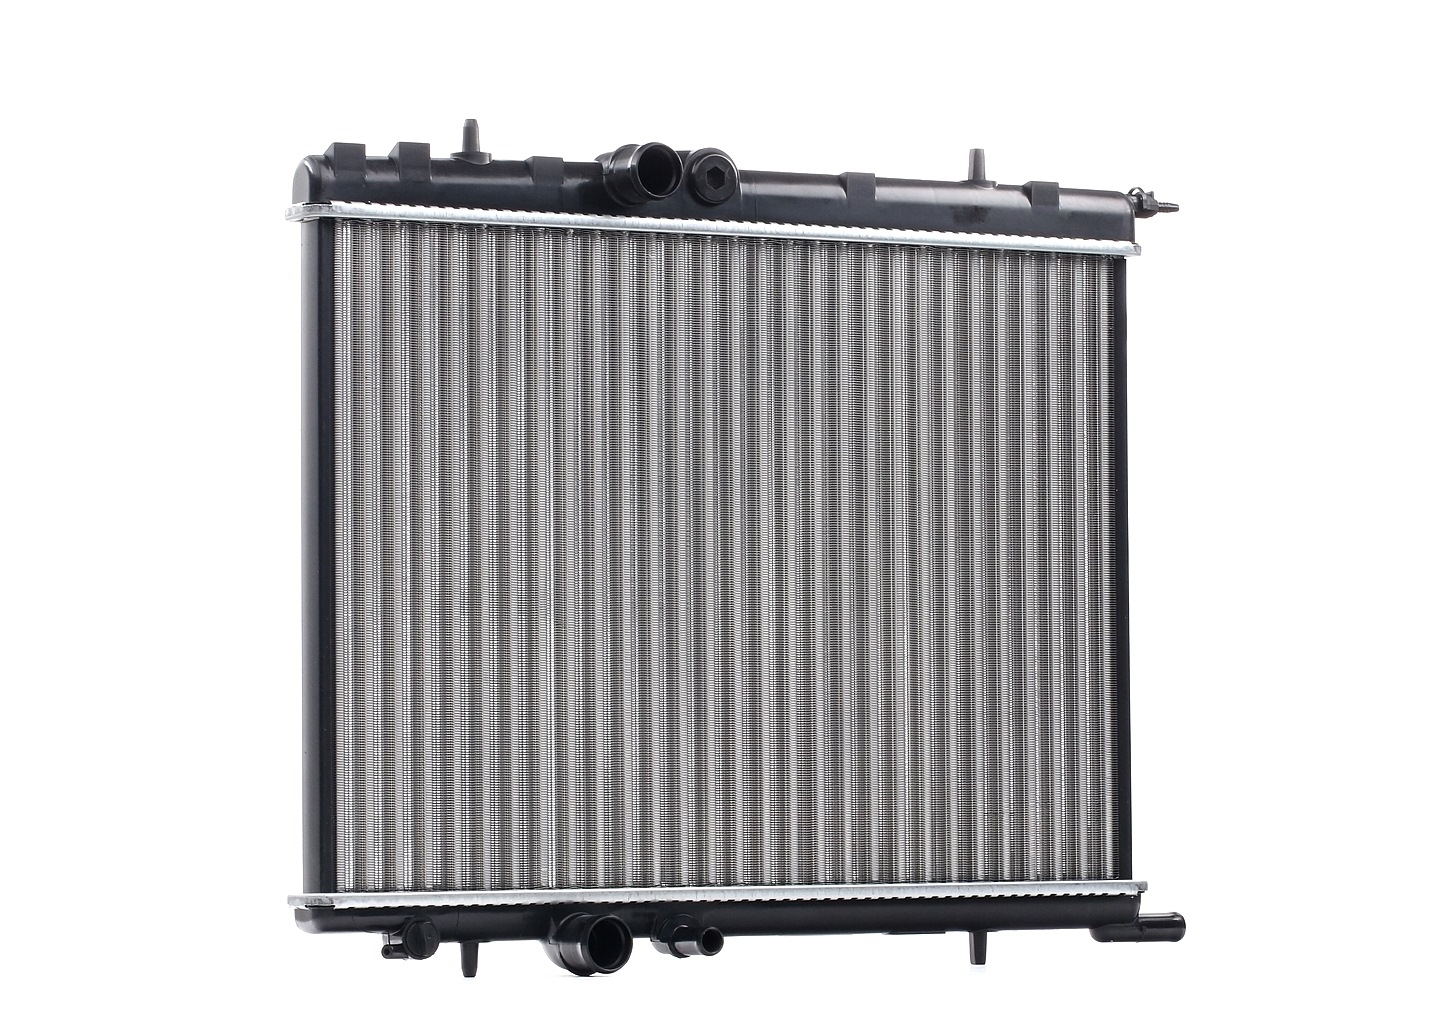 Engine radiator 470R0598 from RIDEX